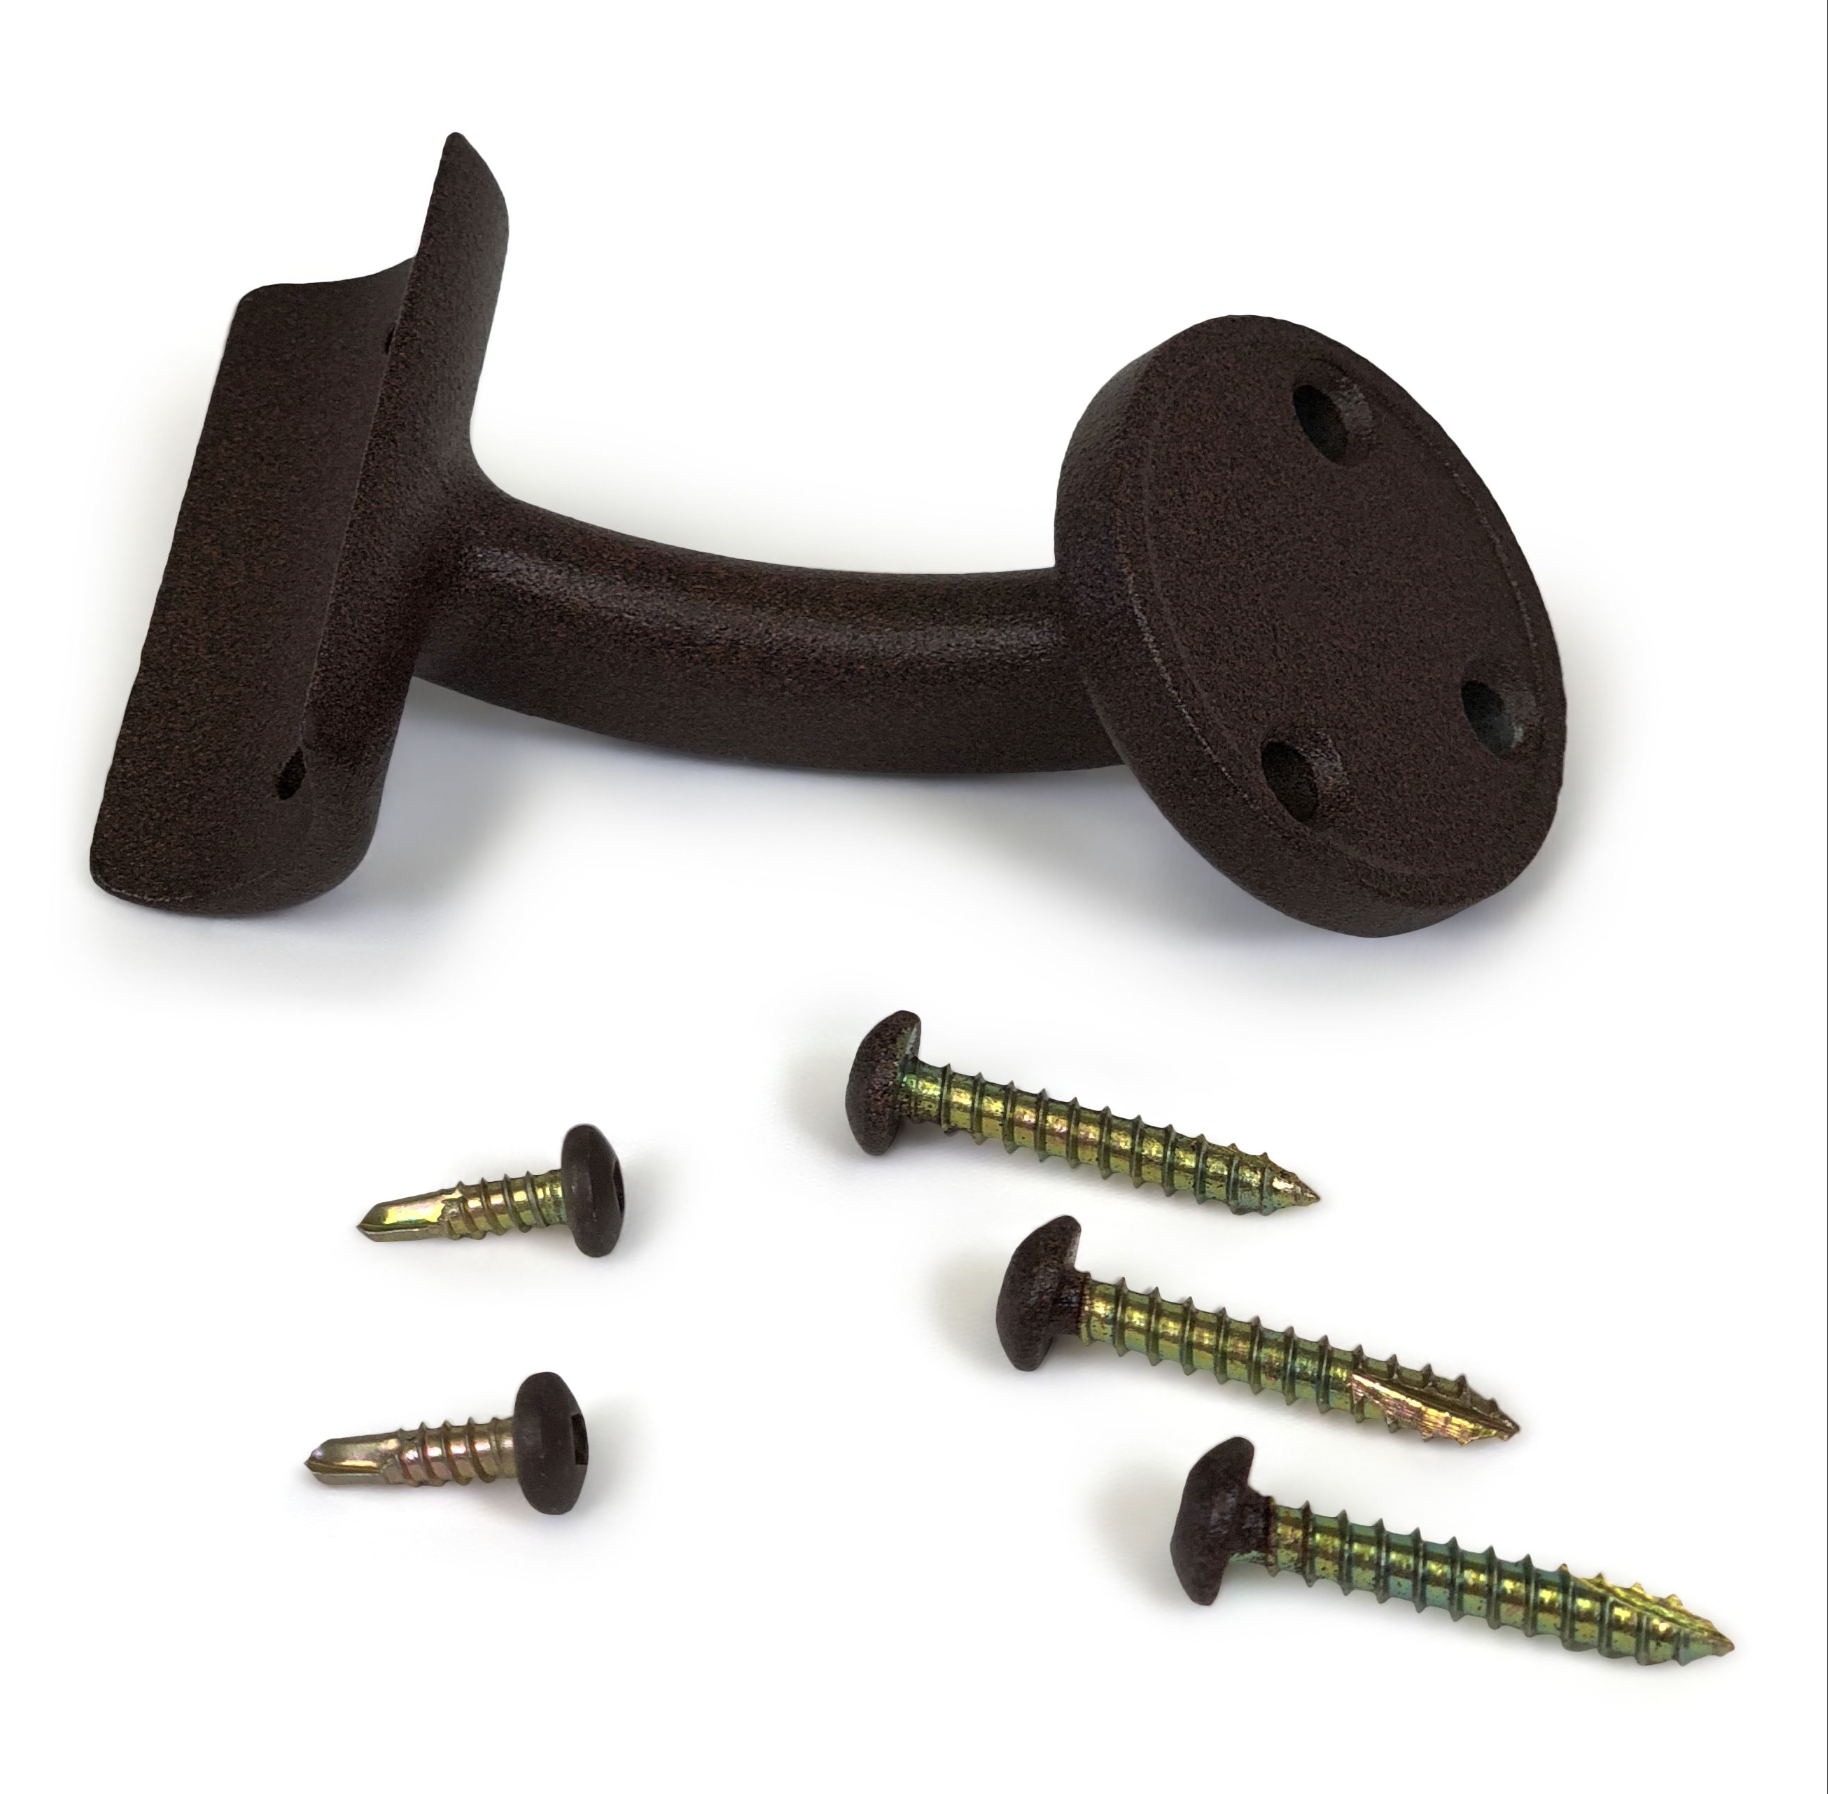 Aluminum Handrail Direct Kit, screws and handle